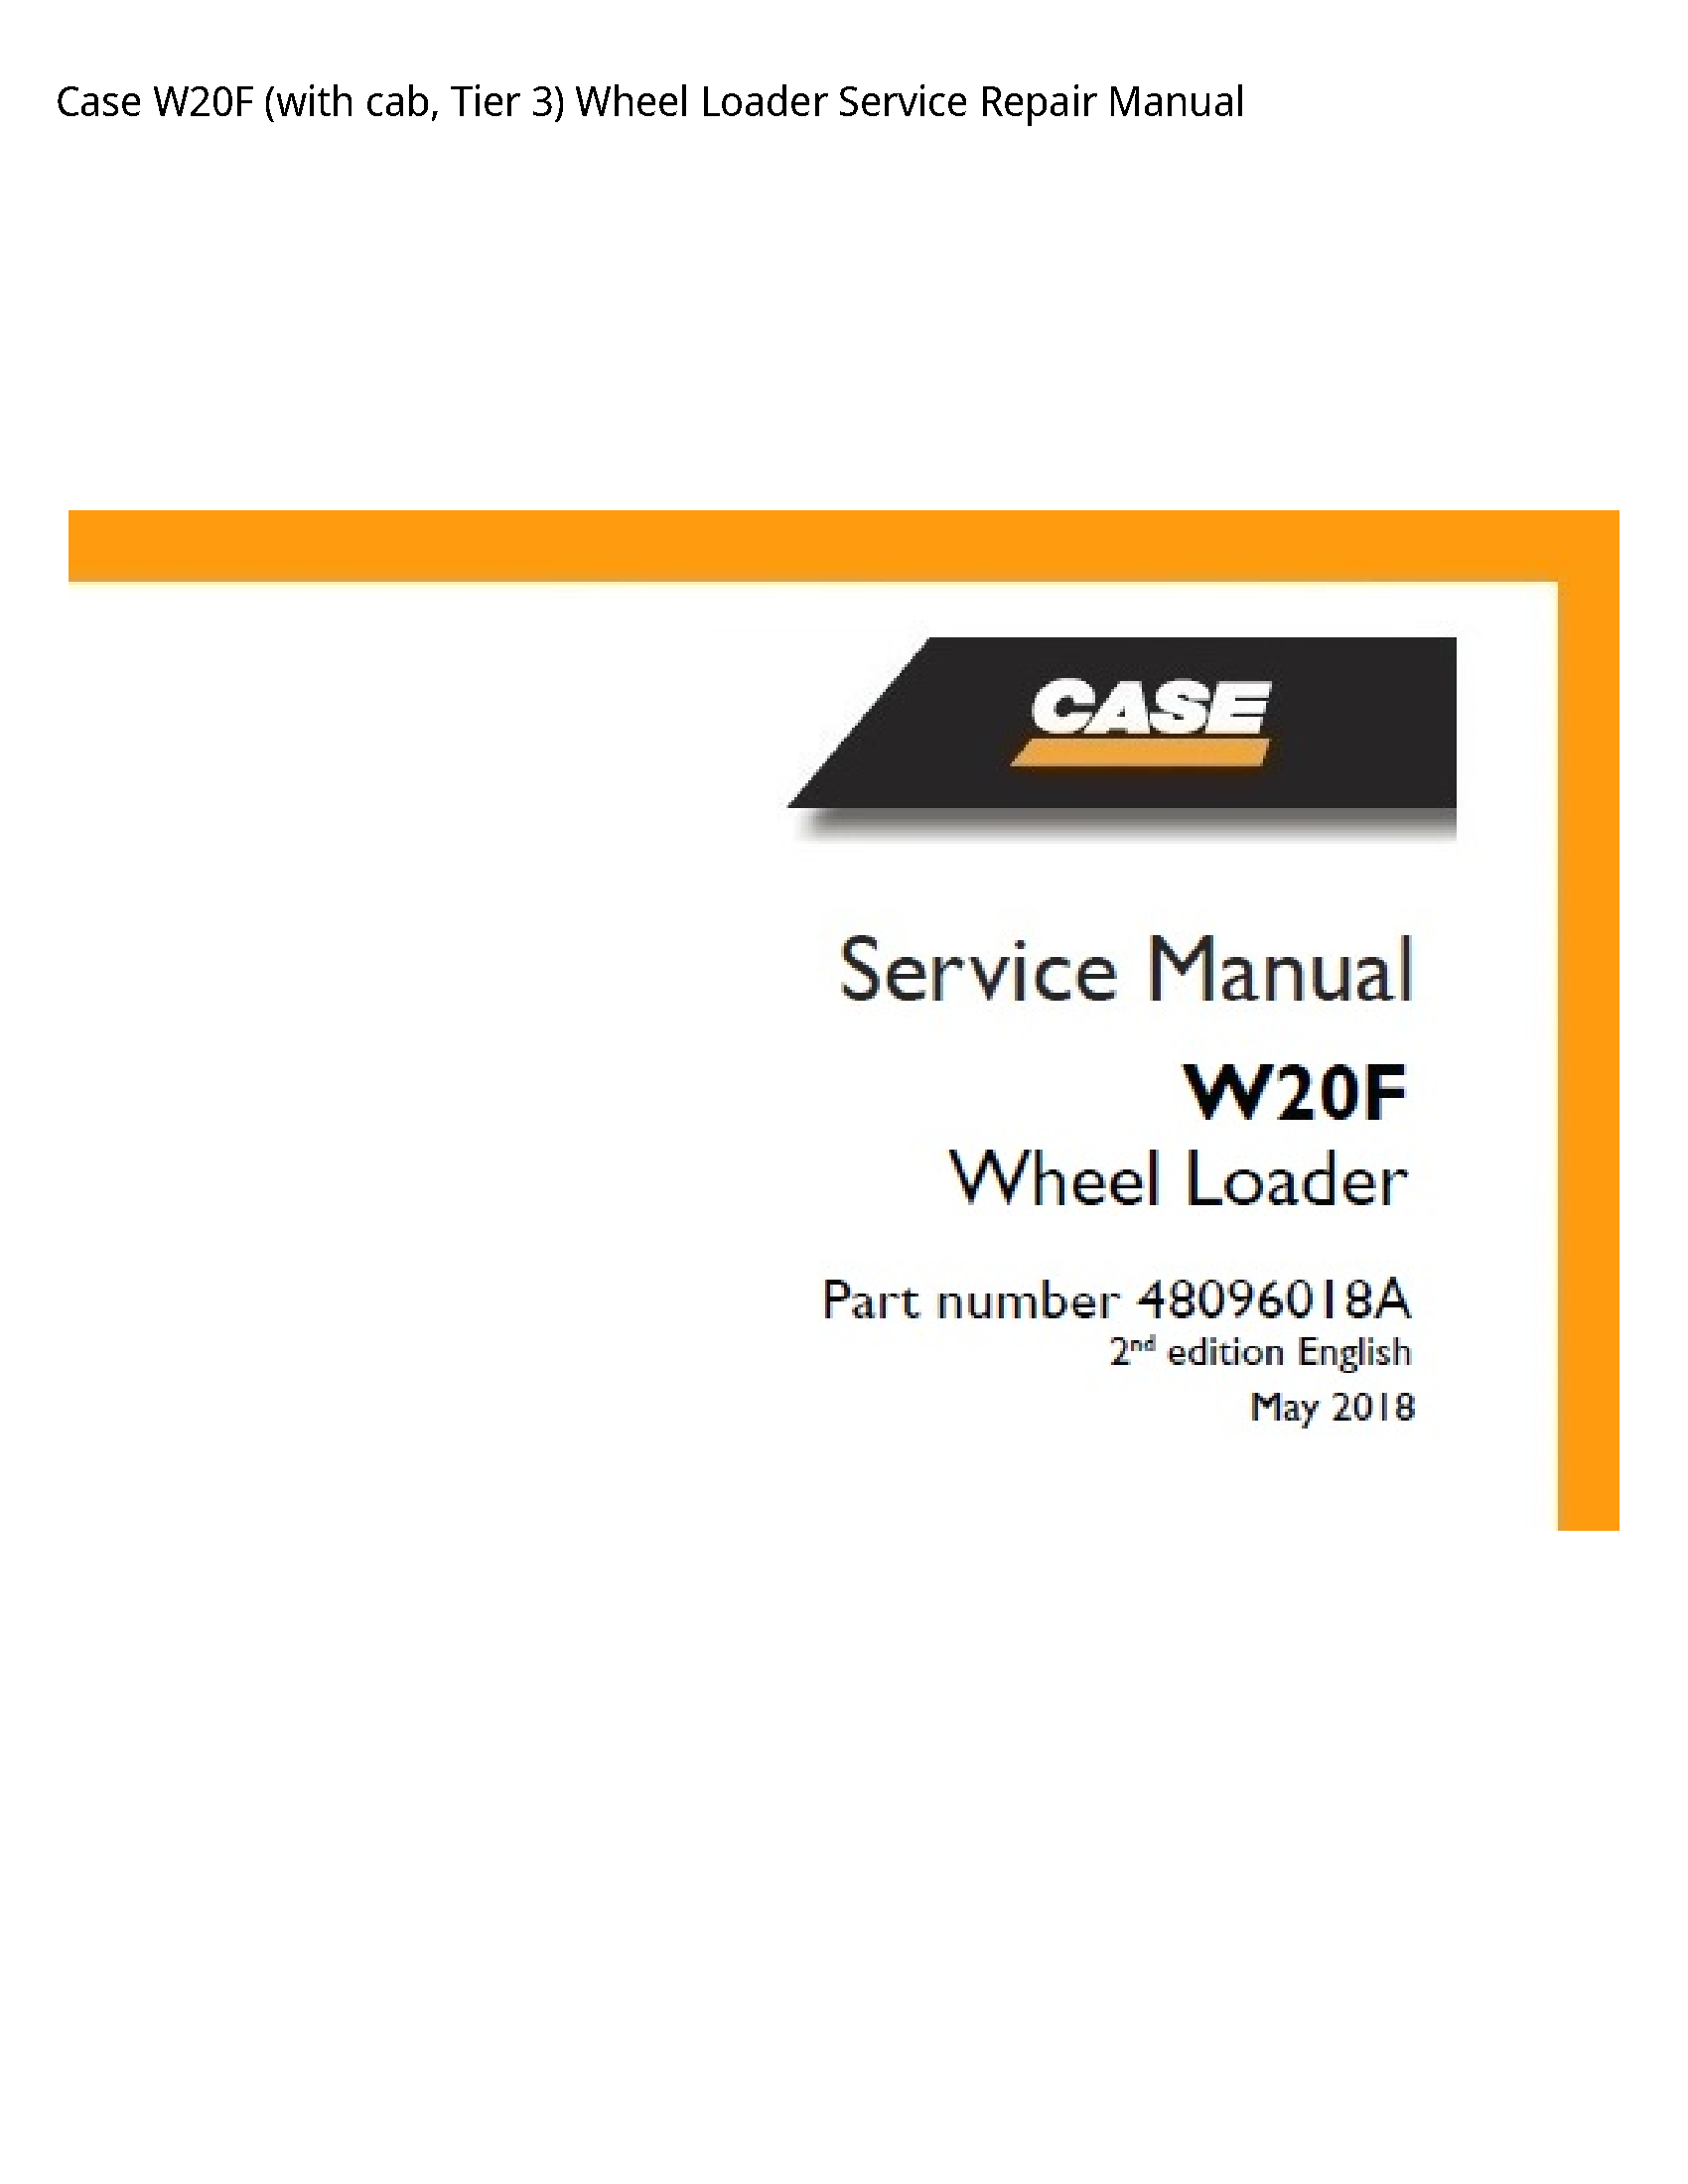 Case/Case IH W20F (with cab manual